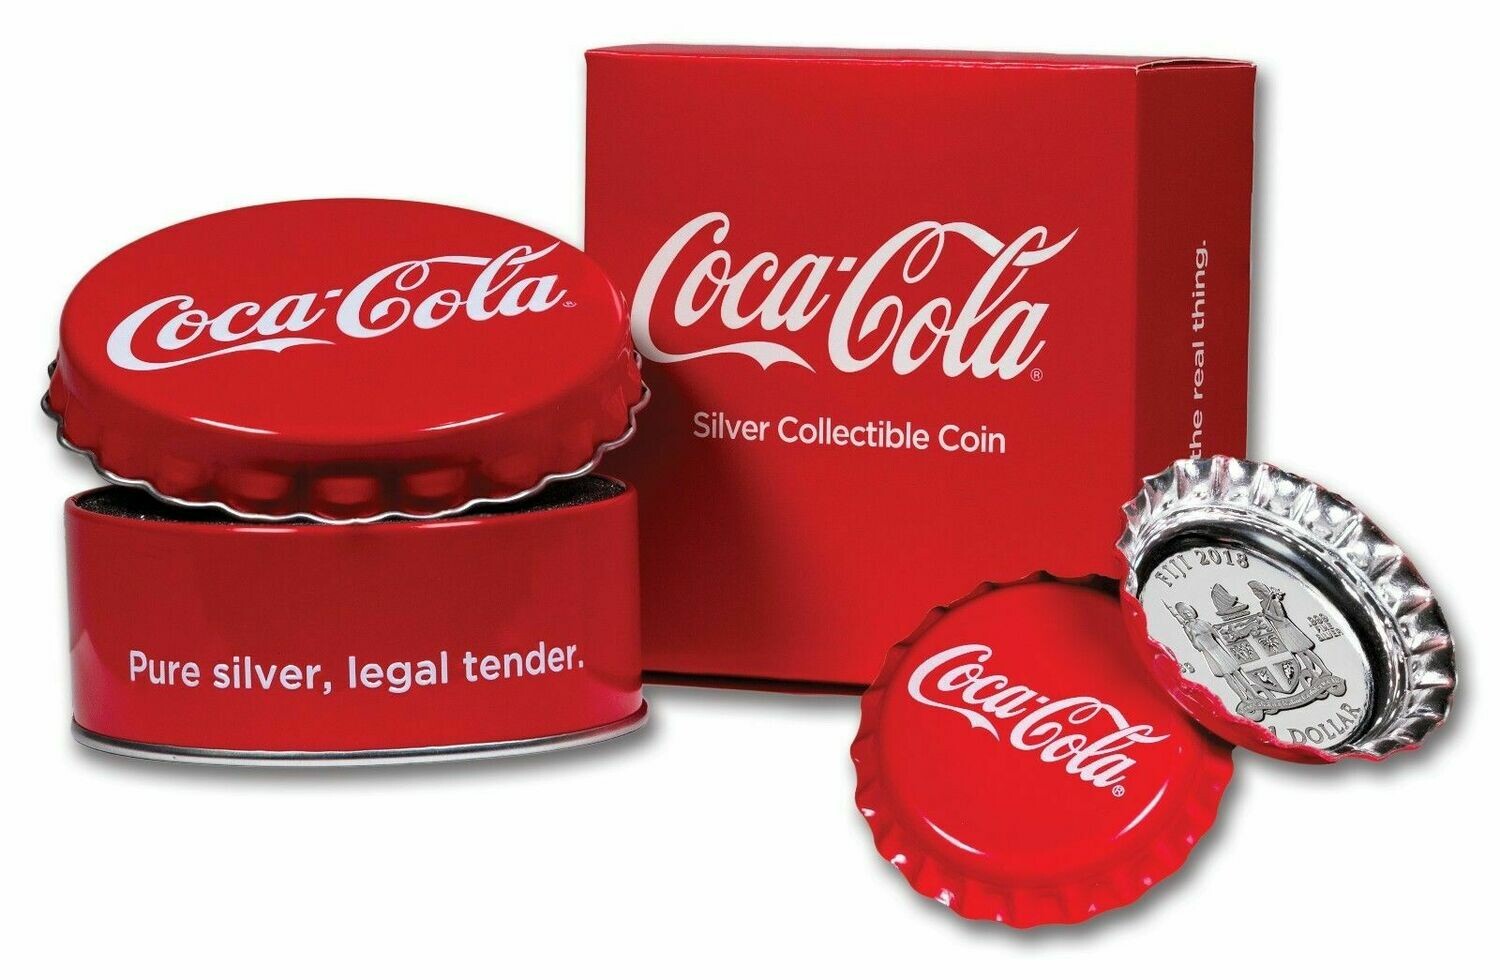 2018 Fiji Coca-Cola Coke Bottle Cap Colour $1 Silver Proof Coin Box Coa